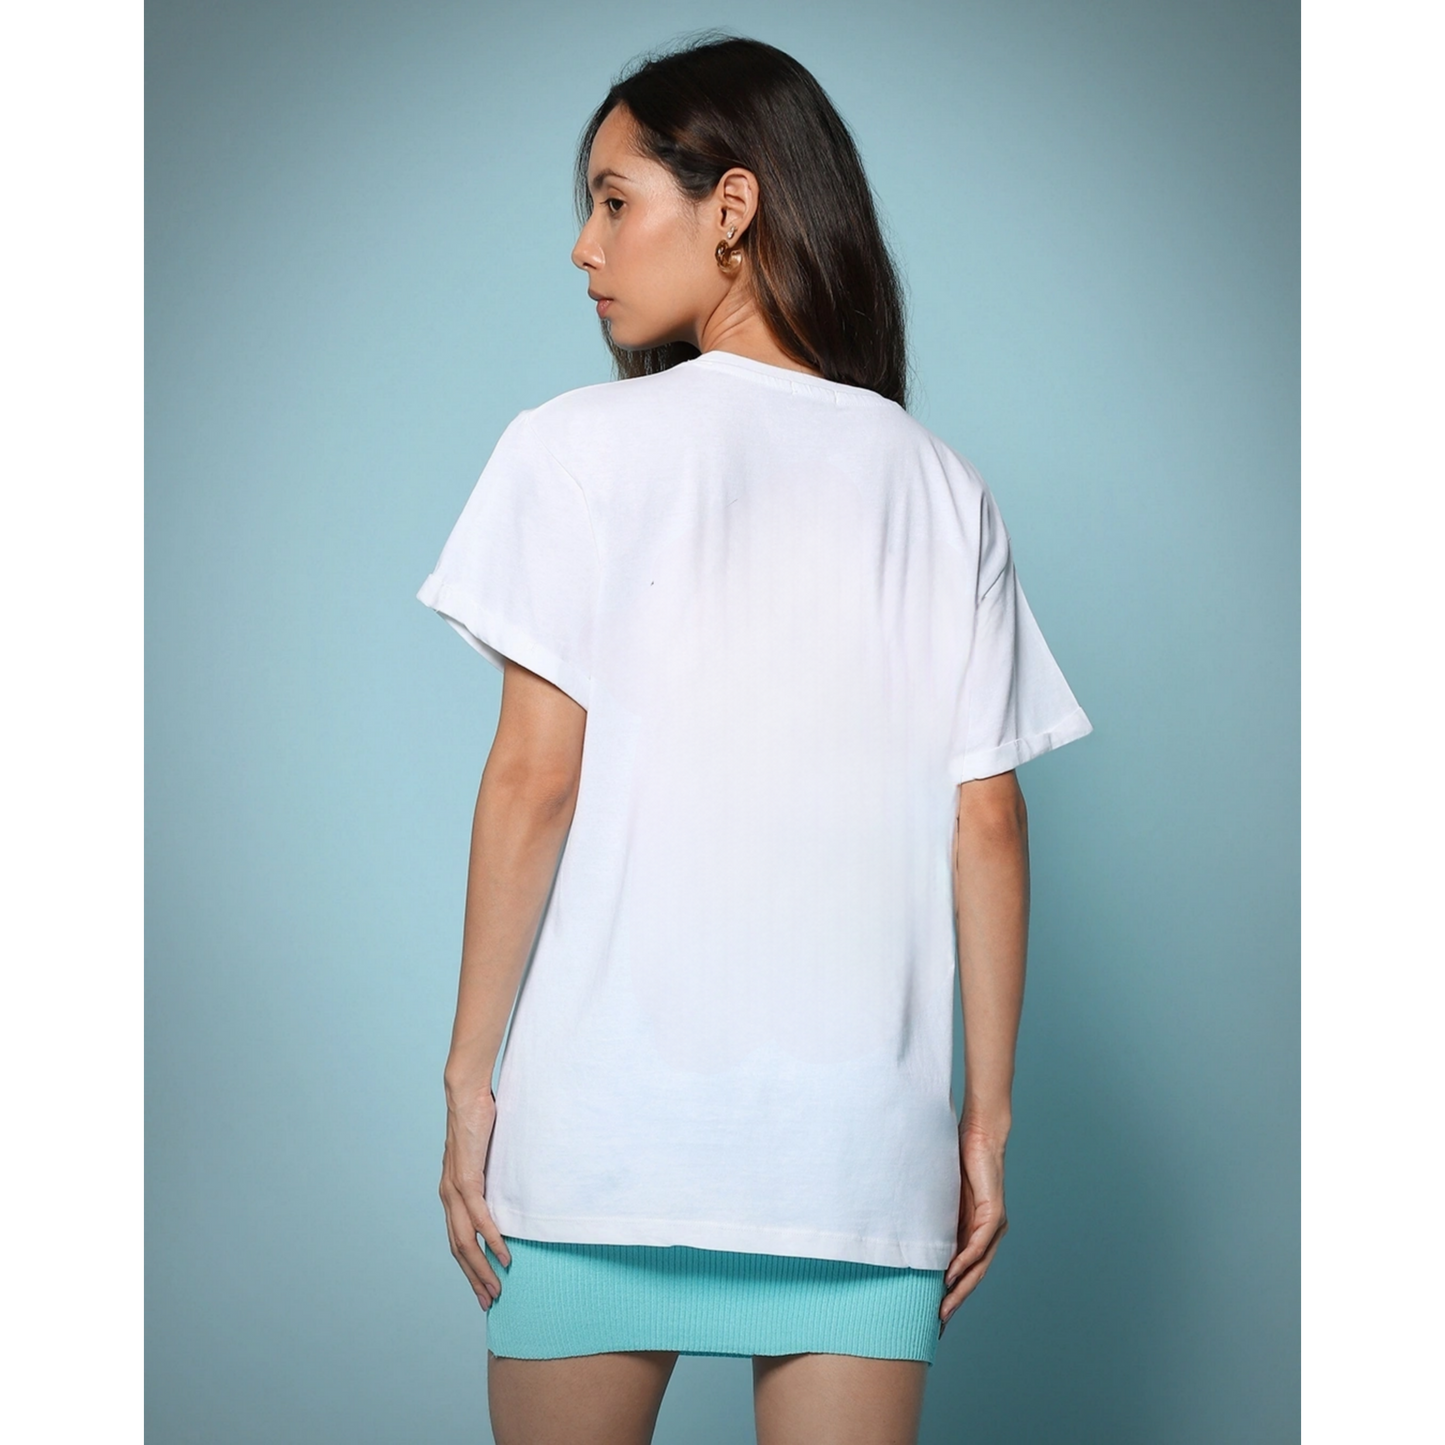 Don't Quit Self (Printed )White Women's T-Shirt